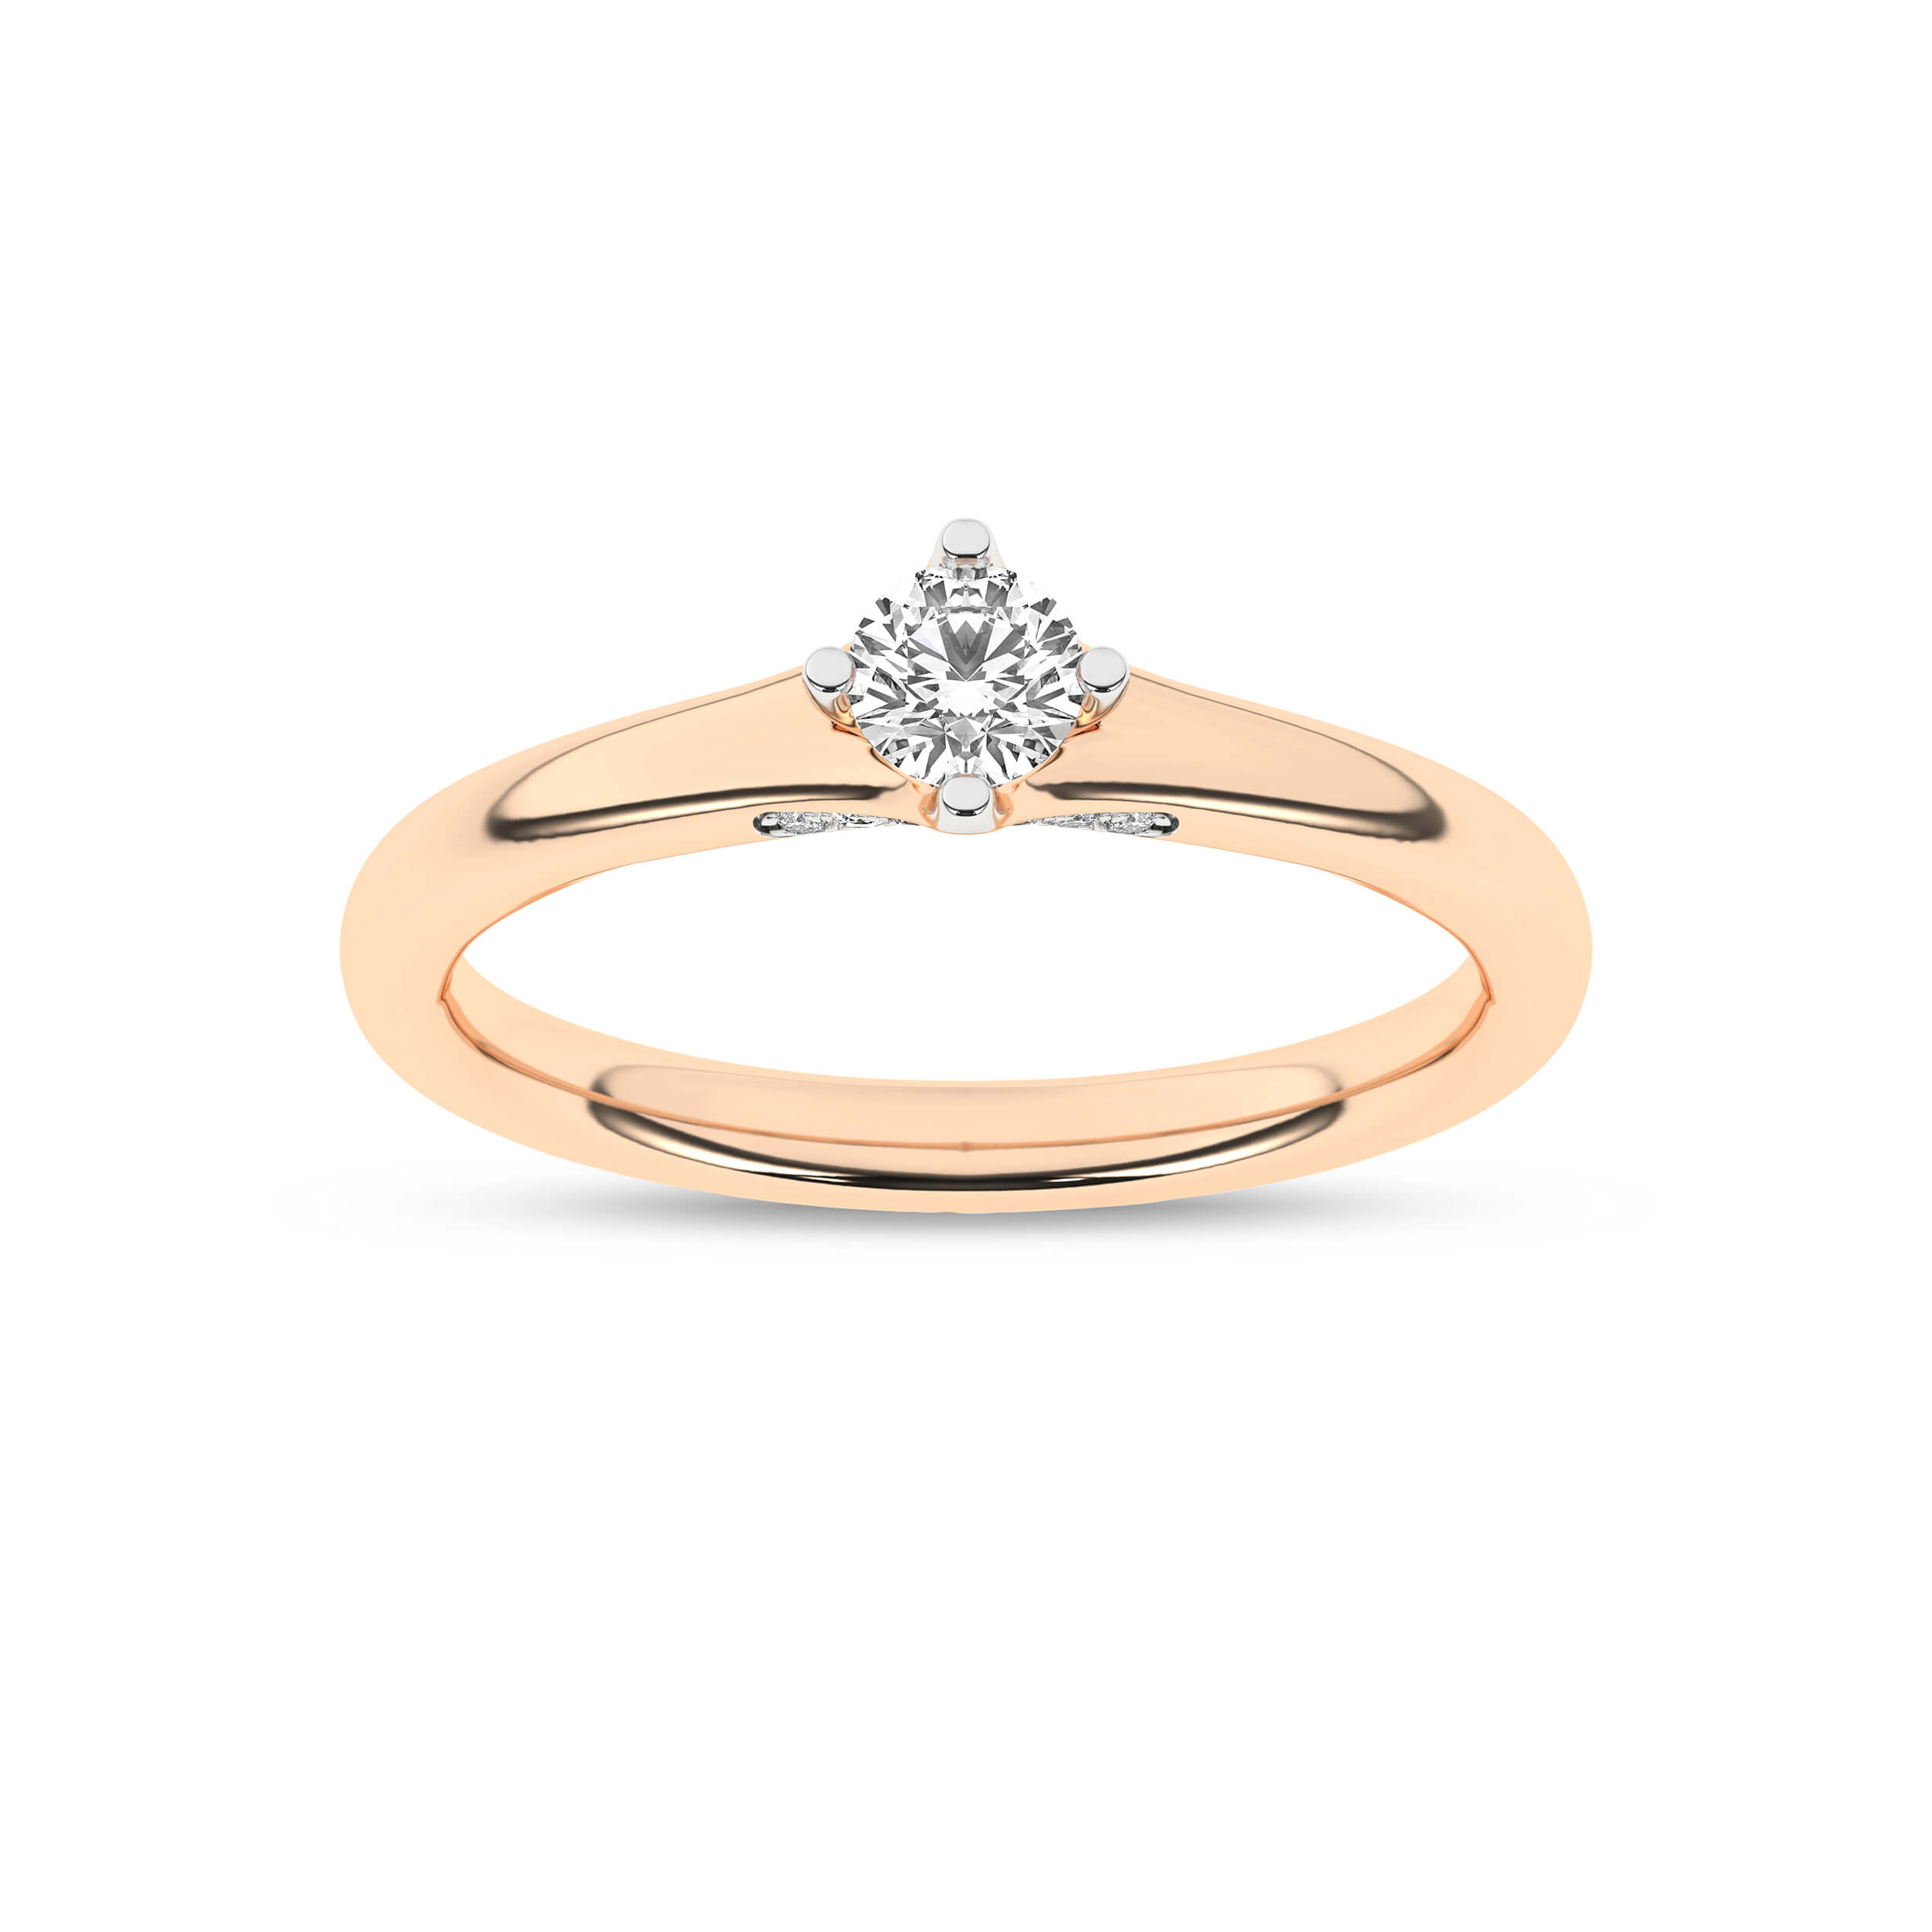 Inel de logodna din Aur Roz 14K cu Diamant 0.25Ct, articol RS0863, previzualizare foto 1